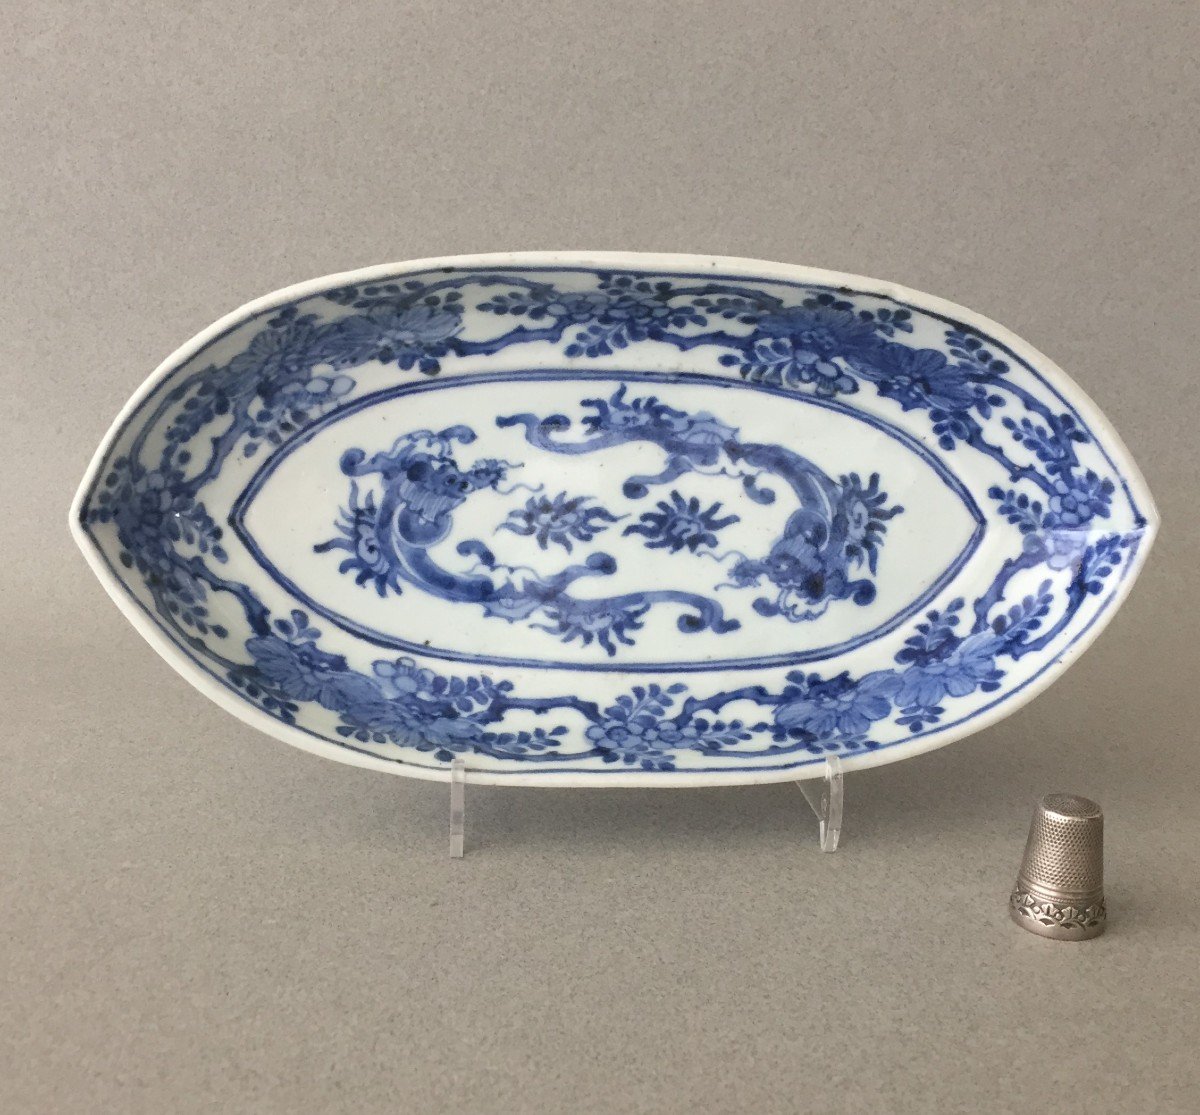 Japon: Petit plat navette Bleu/Blanc 1690 - 1740